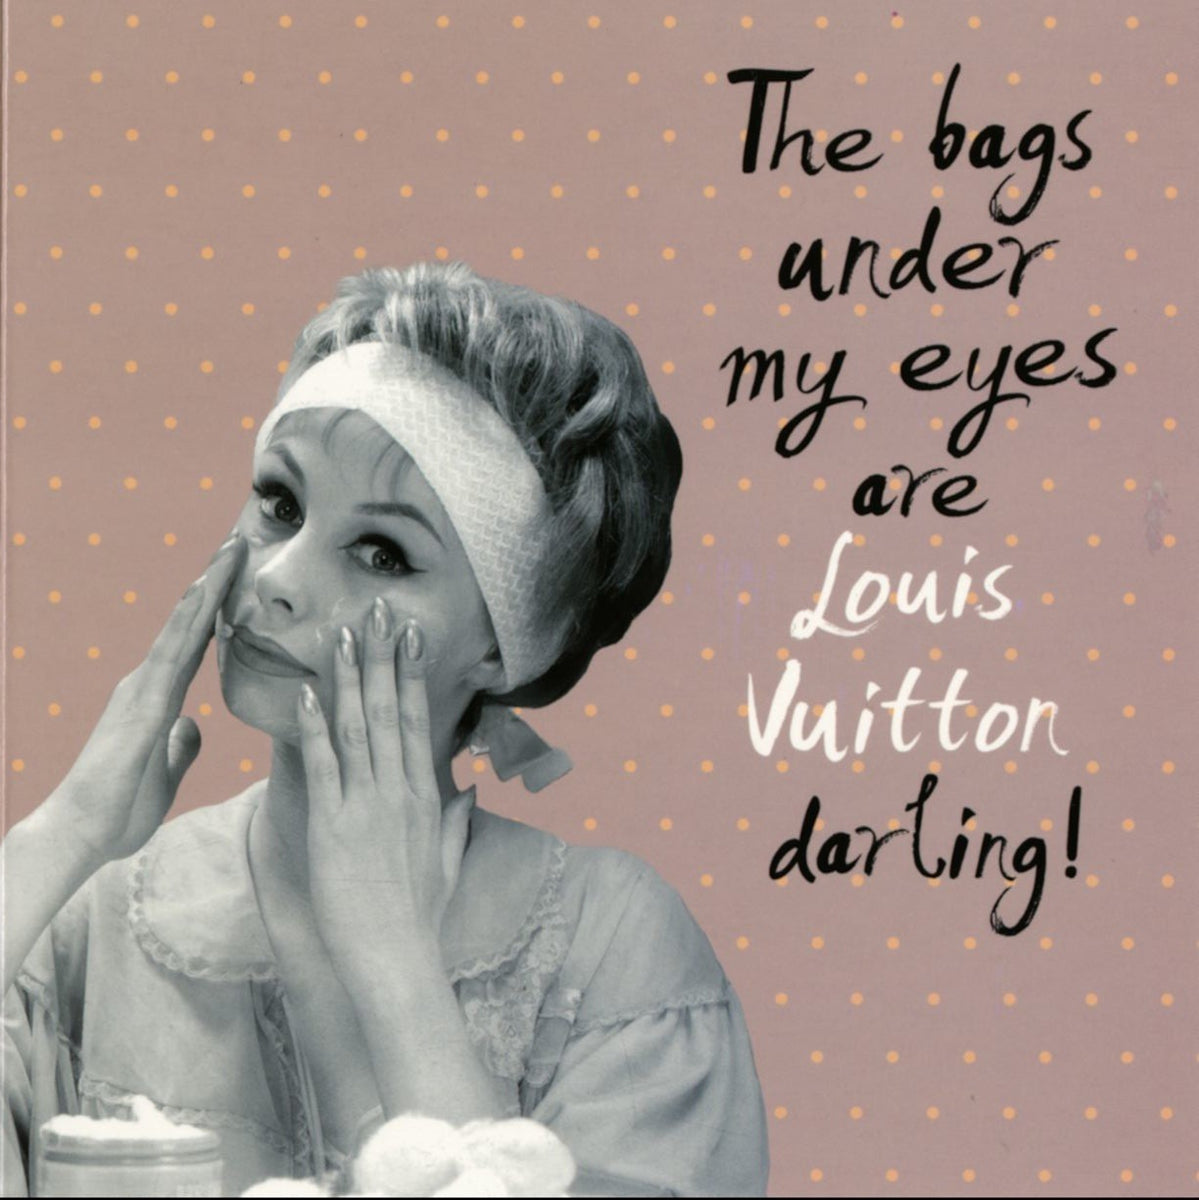 Louis Vuitton greeting card